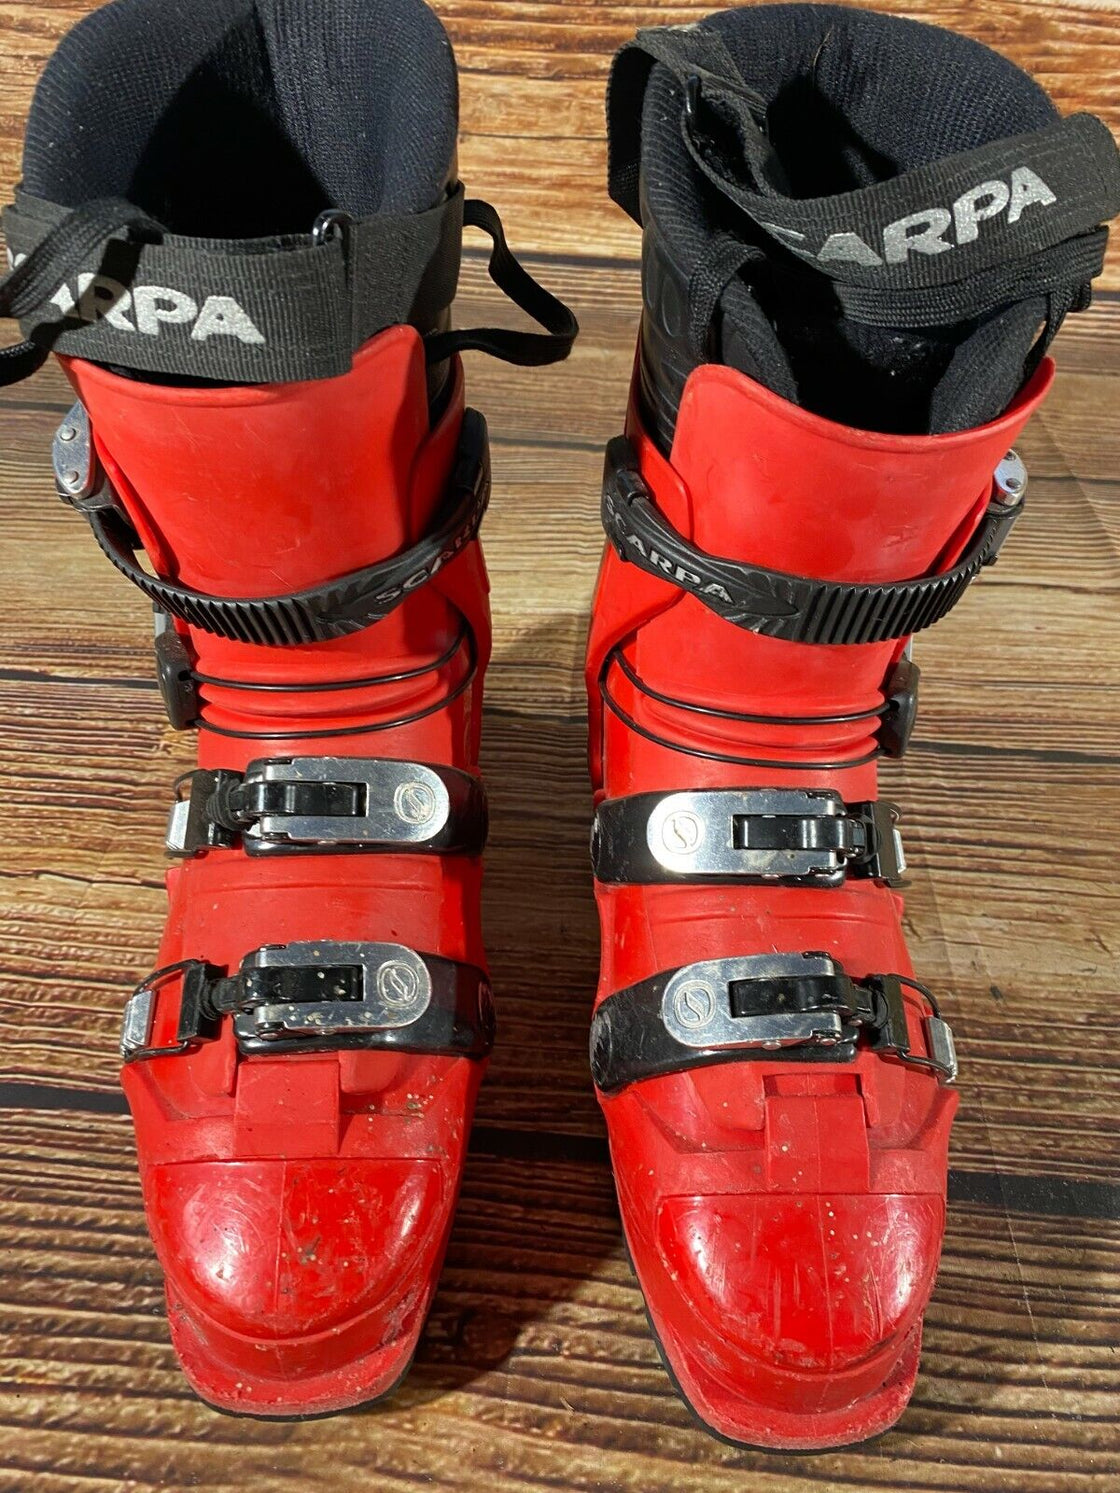 SCARPA Denali Telemark Touring Alpine Ski Boots Size Mondo 283 mm EU44 US10